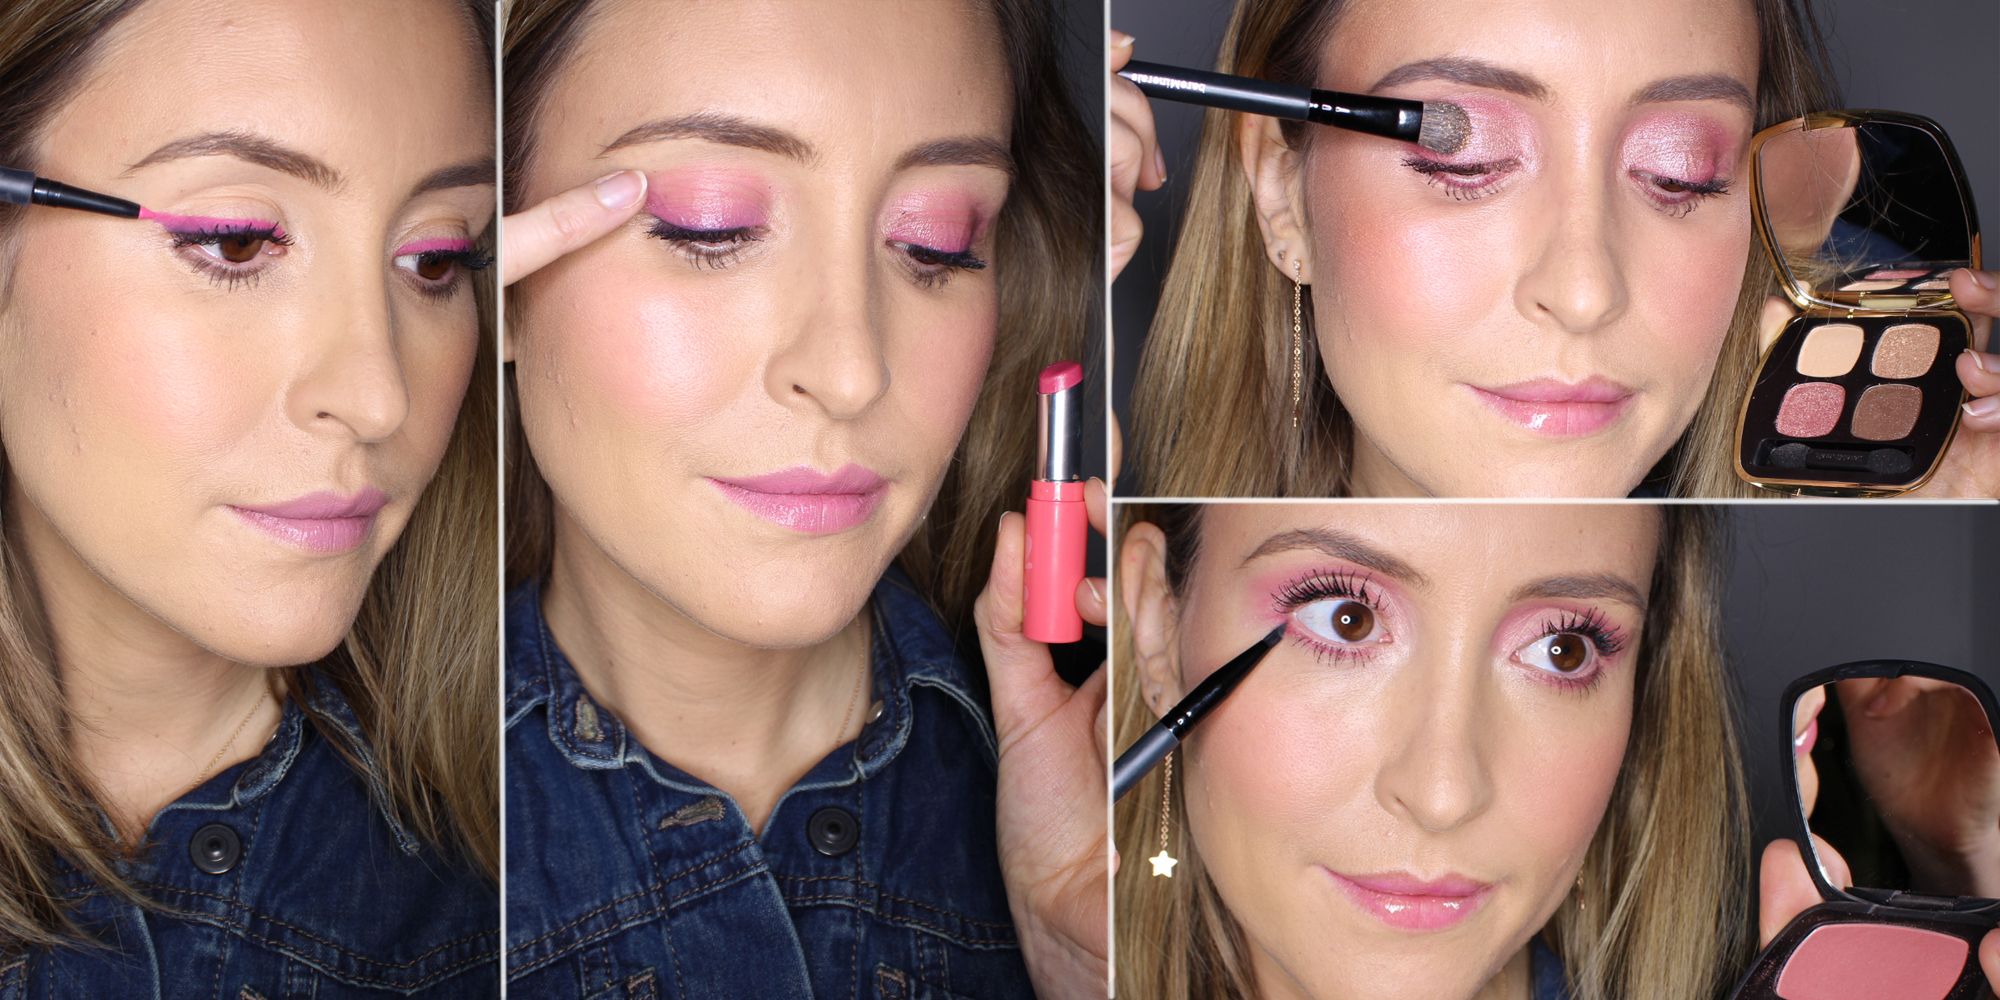 how to apply eye makeup like a pro